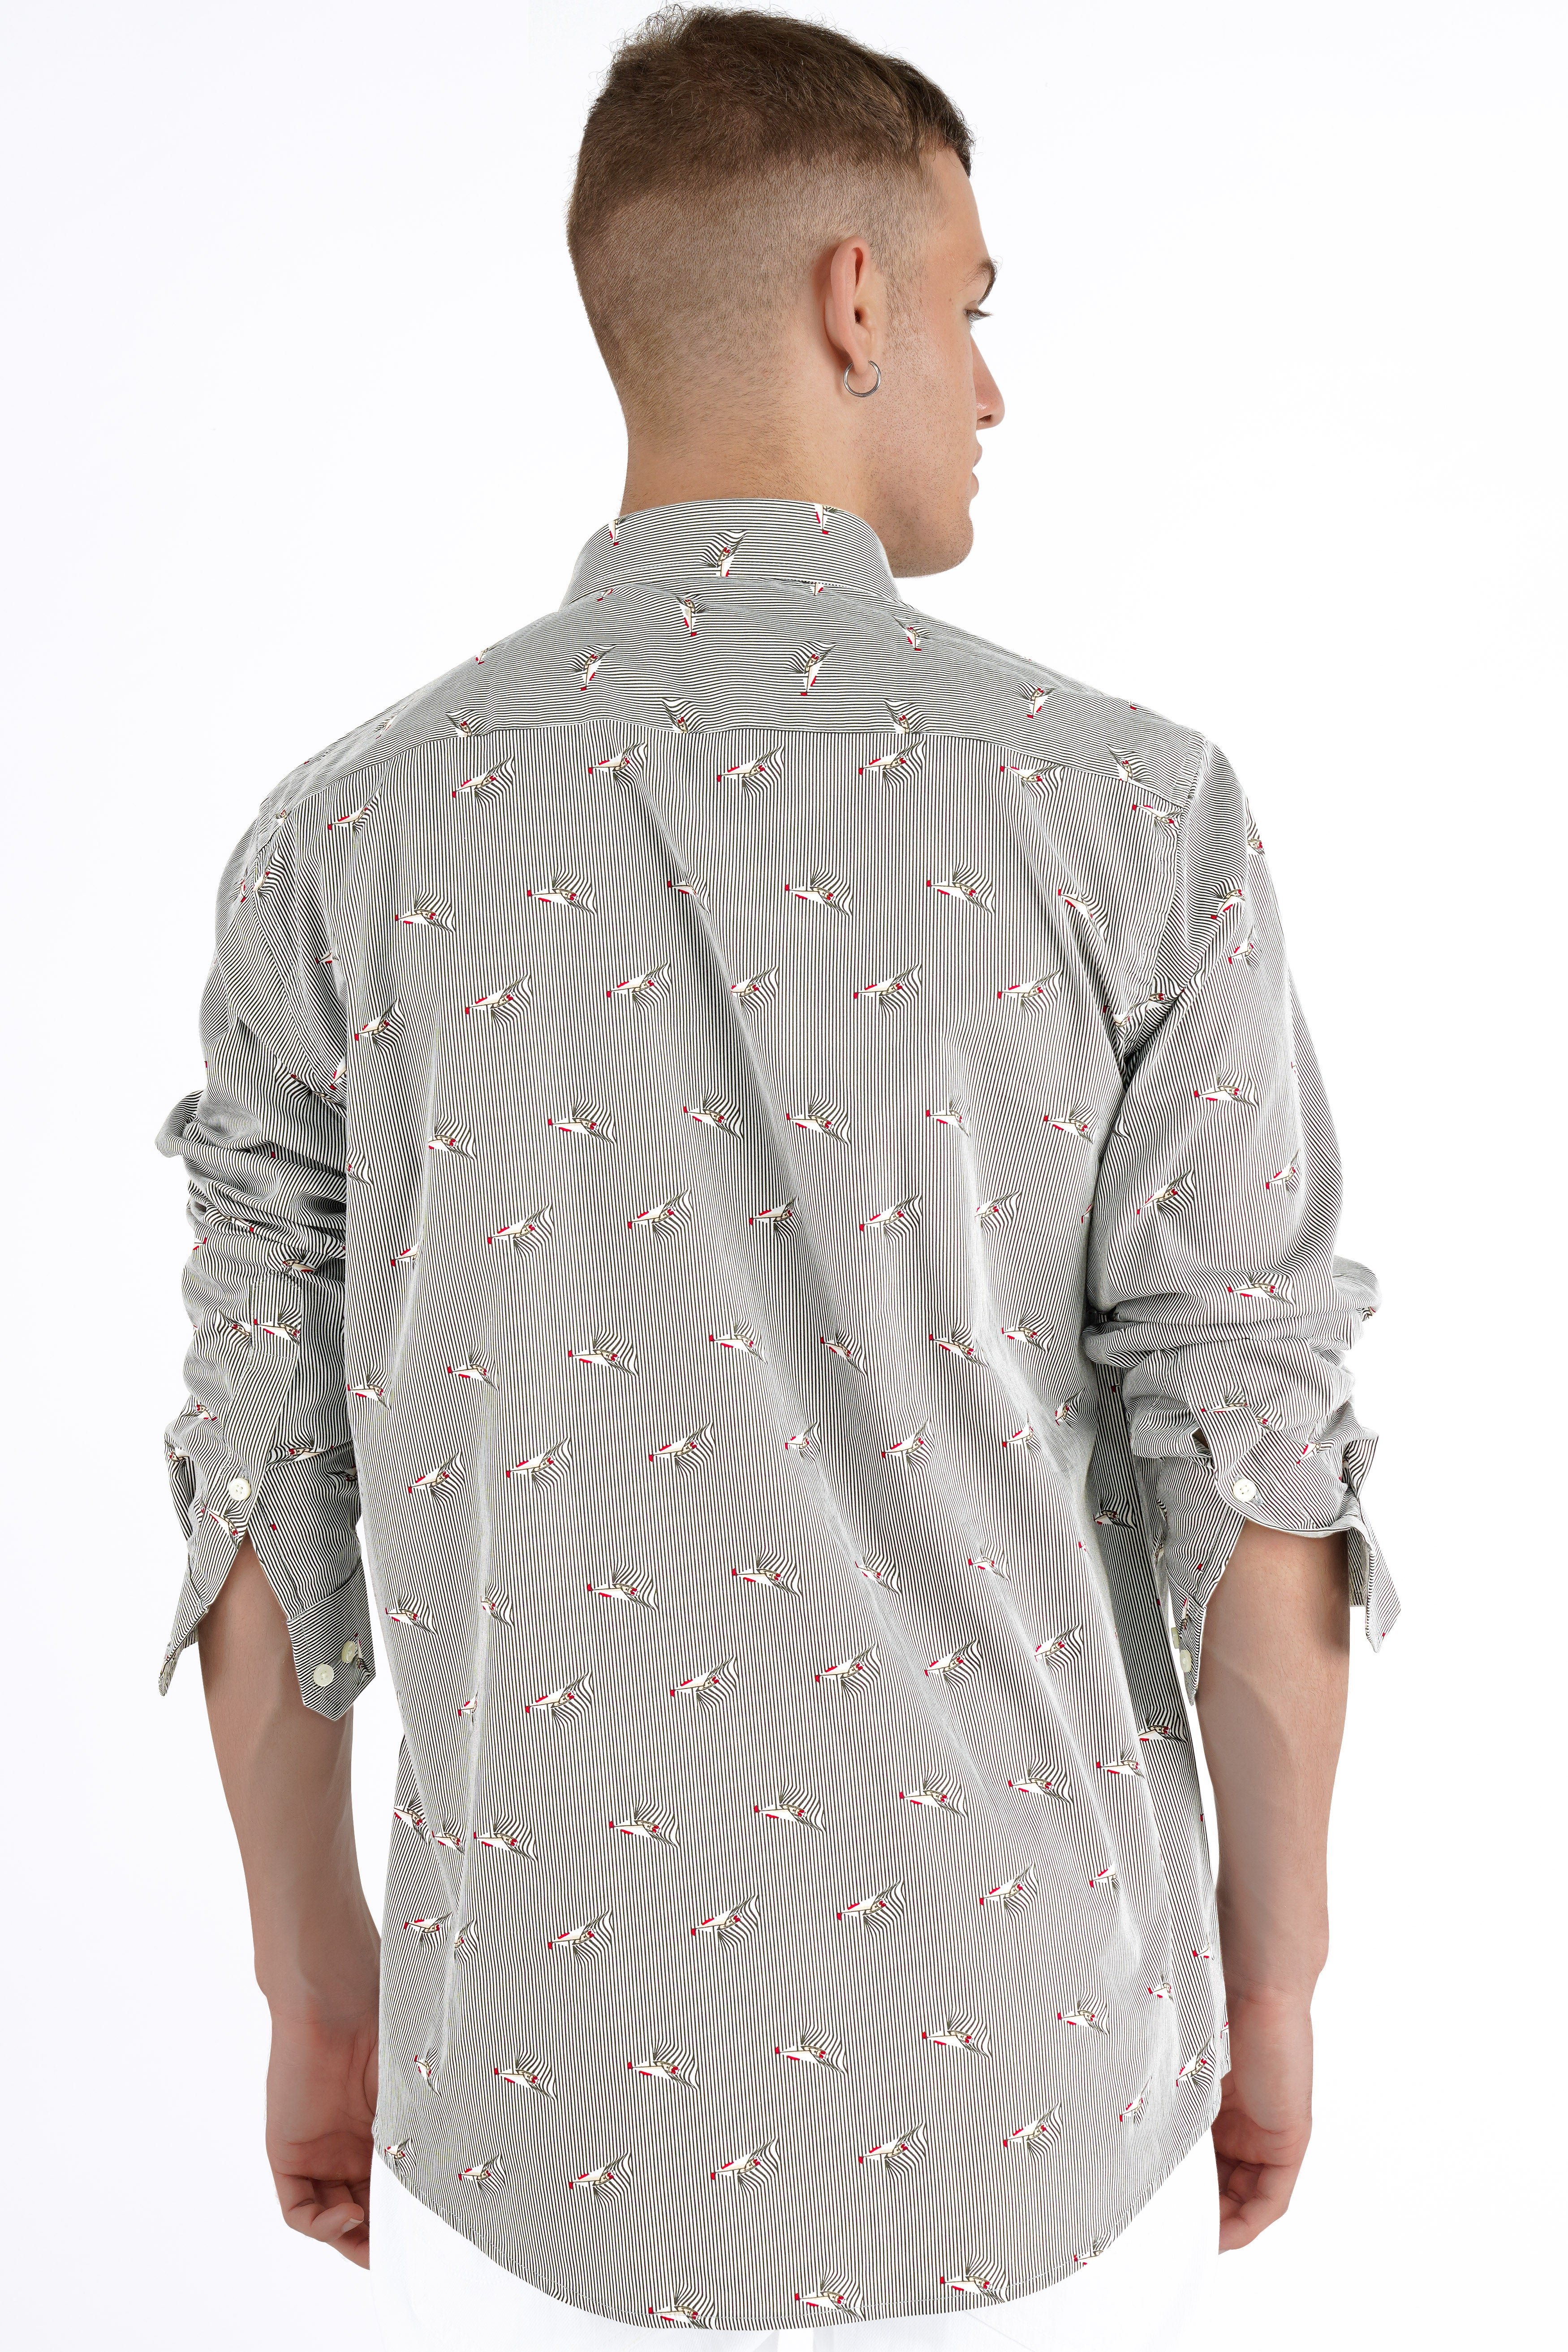 Ash Gray Fish Printed Premium Cotton Designer Shirt